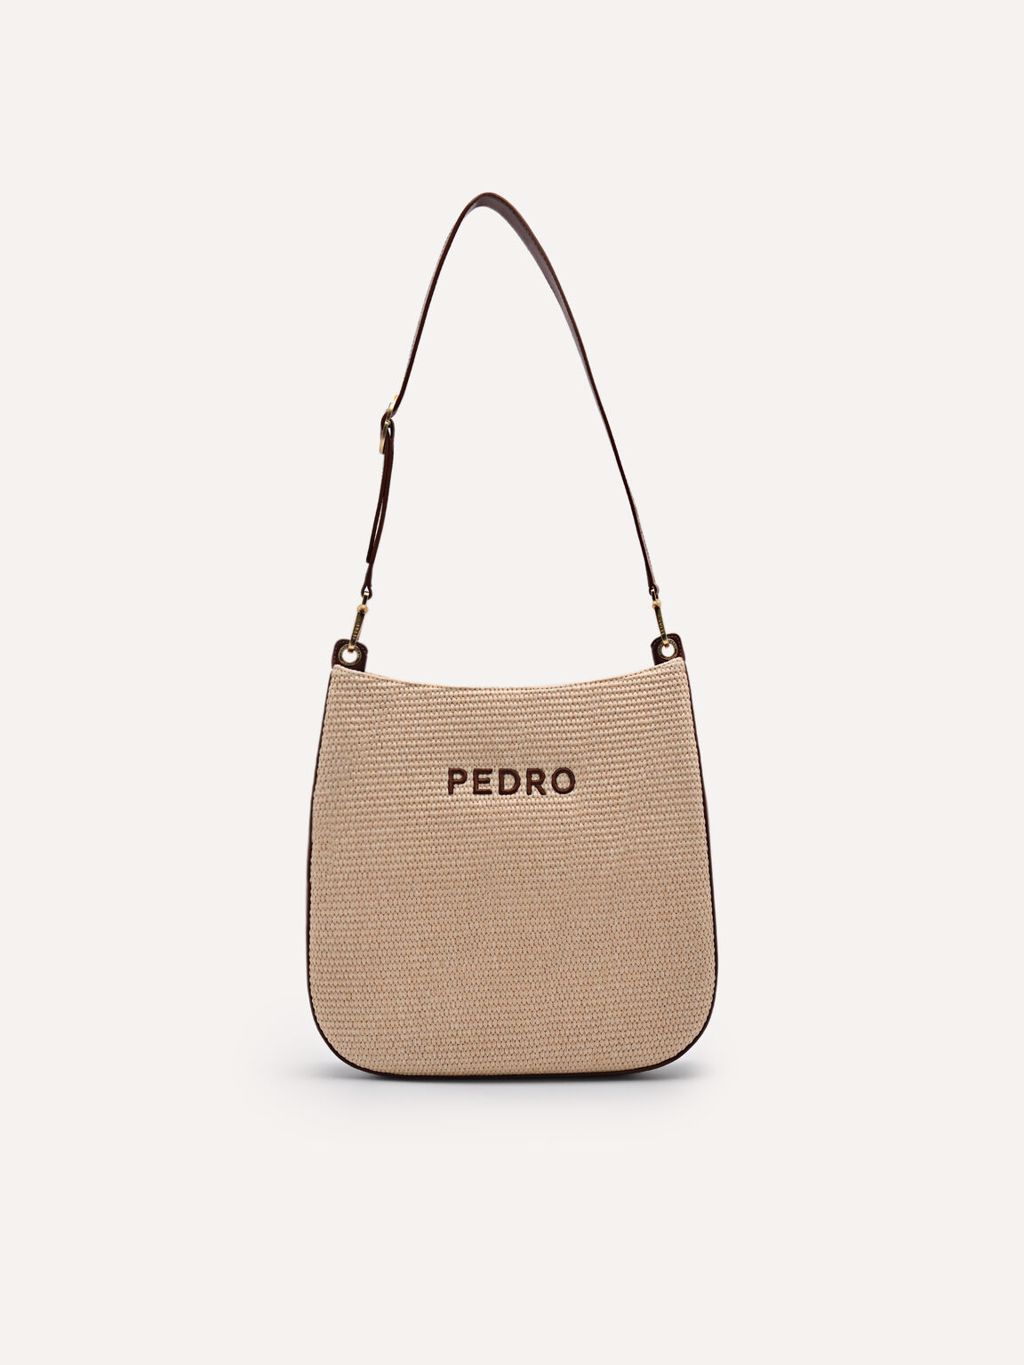 PEDRO 曲線流浪包，3490元。（PEDRO 提供/林欣儀台北傳真）